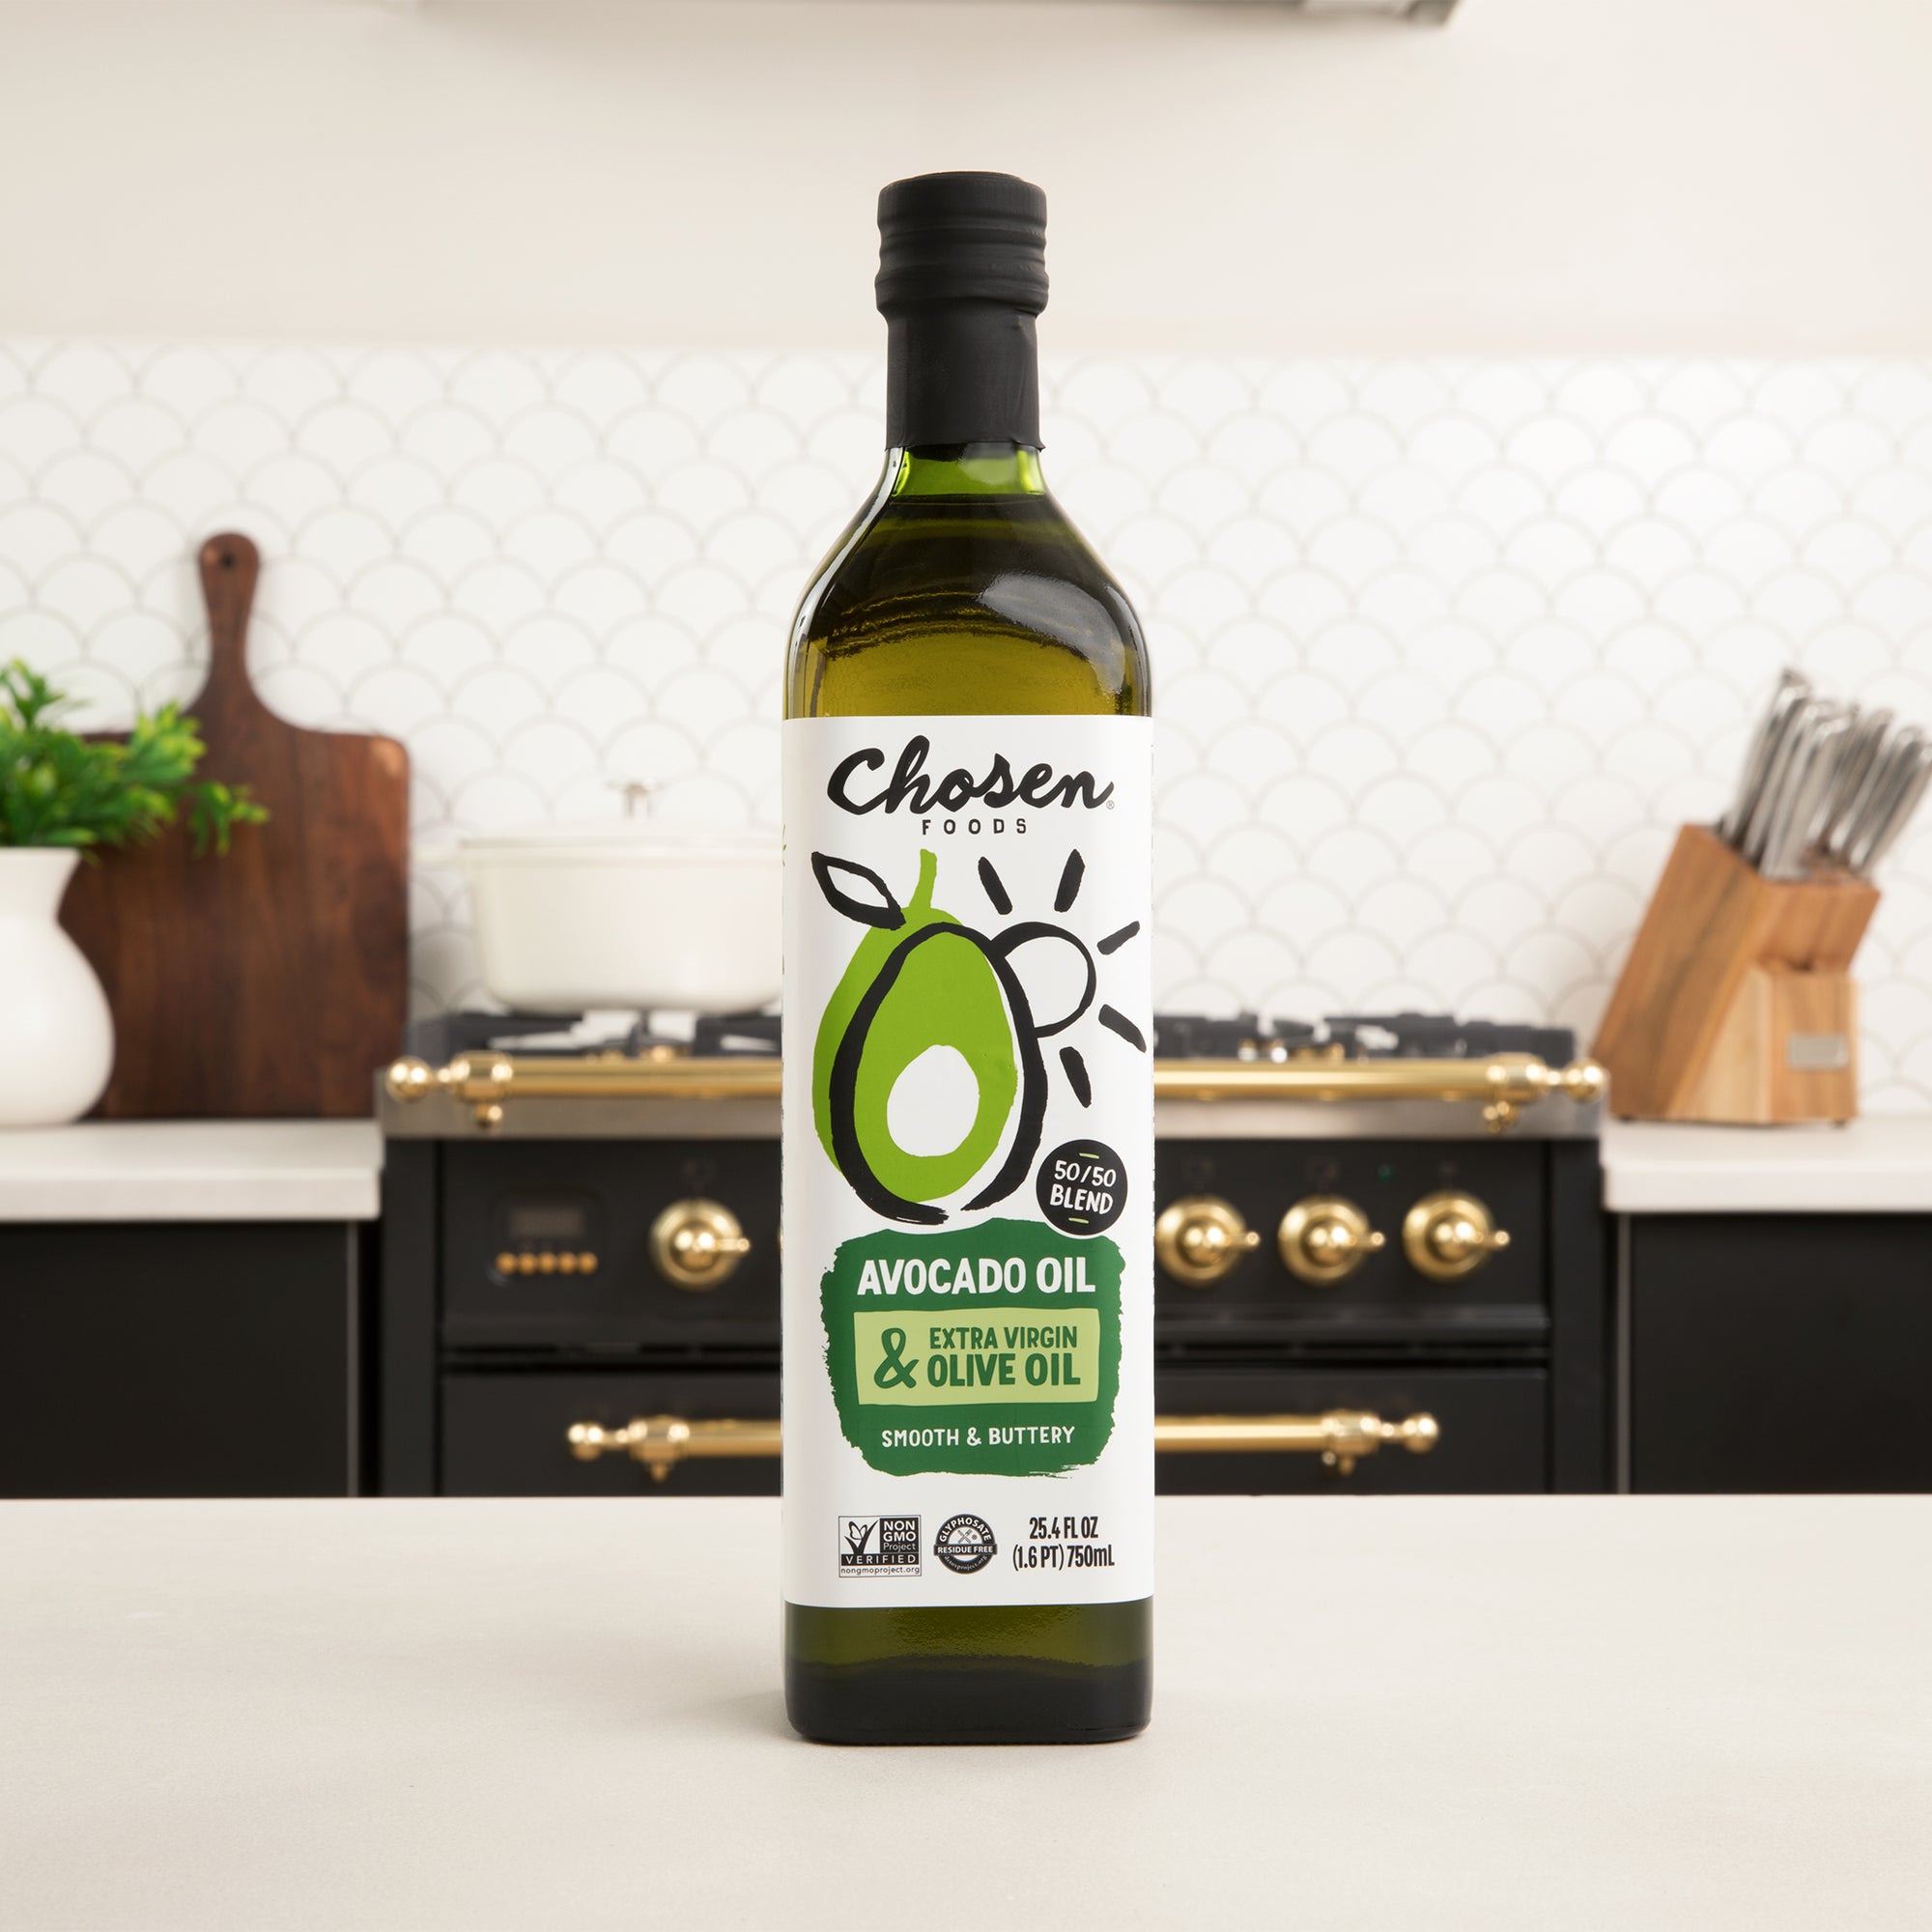 50/50 Blend 100% Pure Avocado + Extra Virgin Olive Oil 750ml Glass Bot